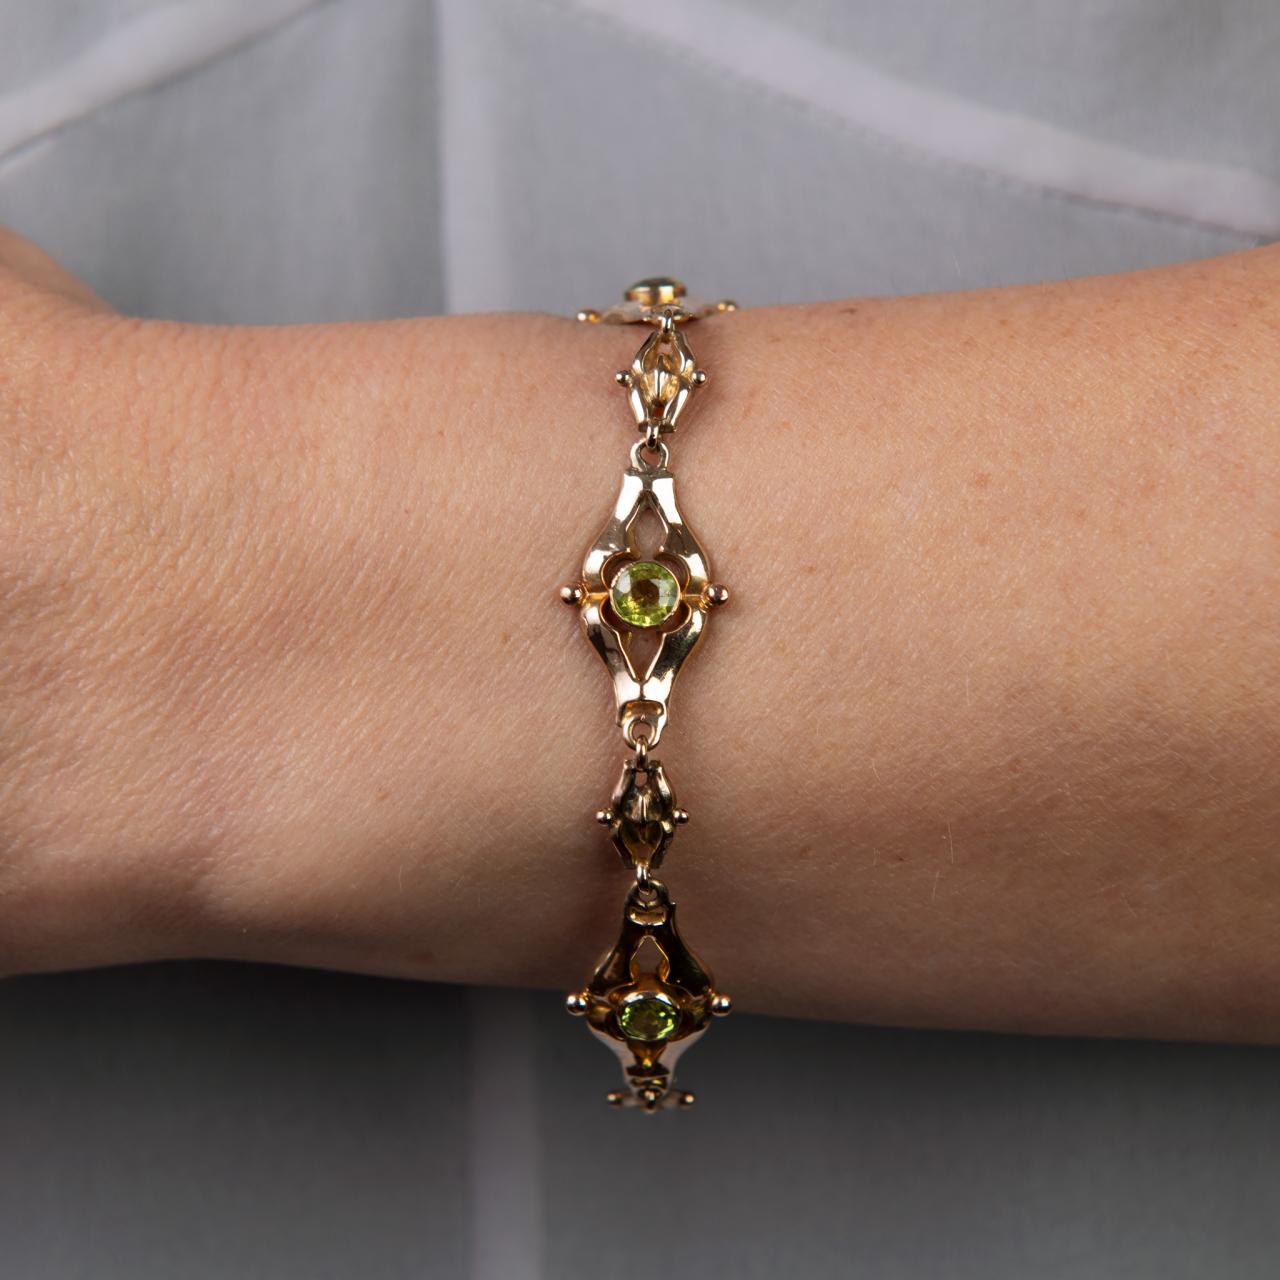 Antique Gold & Peridot Ornate Gate-link Bracelet